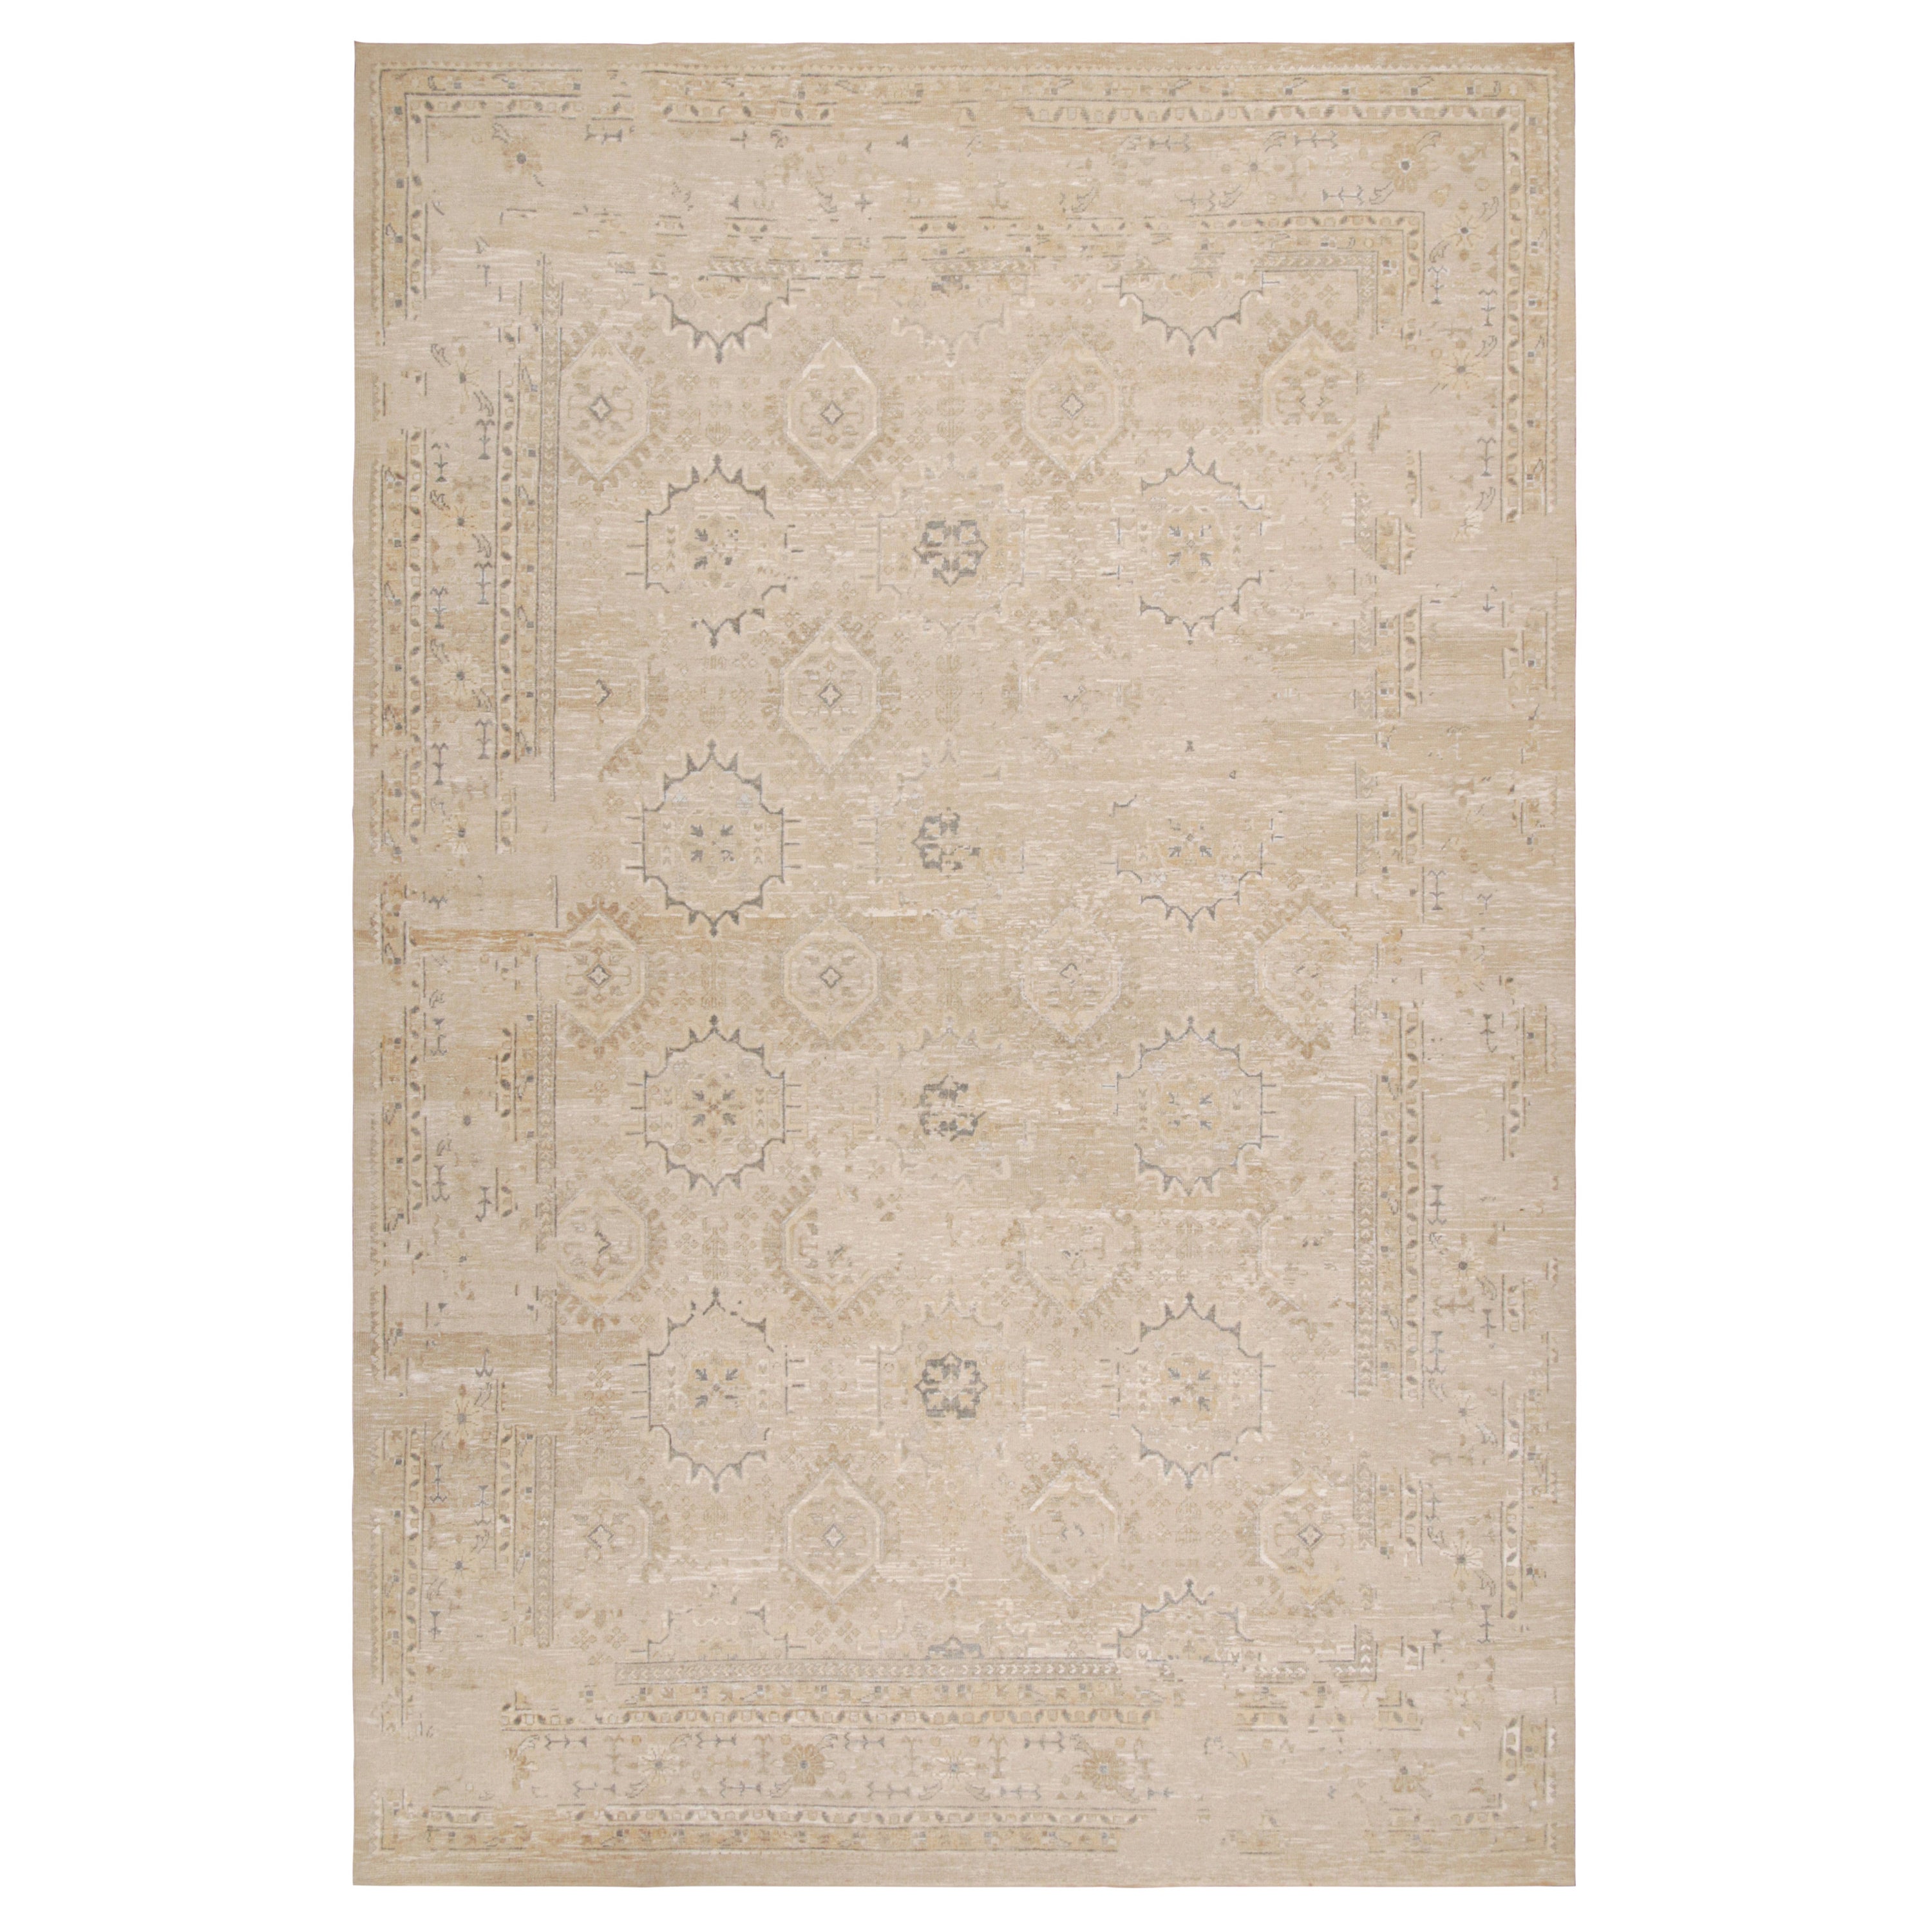 Rug & Kilim's Oushak Style Teppich in Beige & grau Geometrisch gemustert